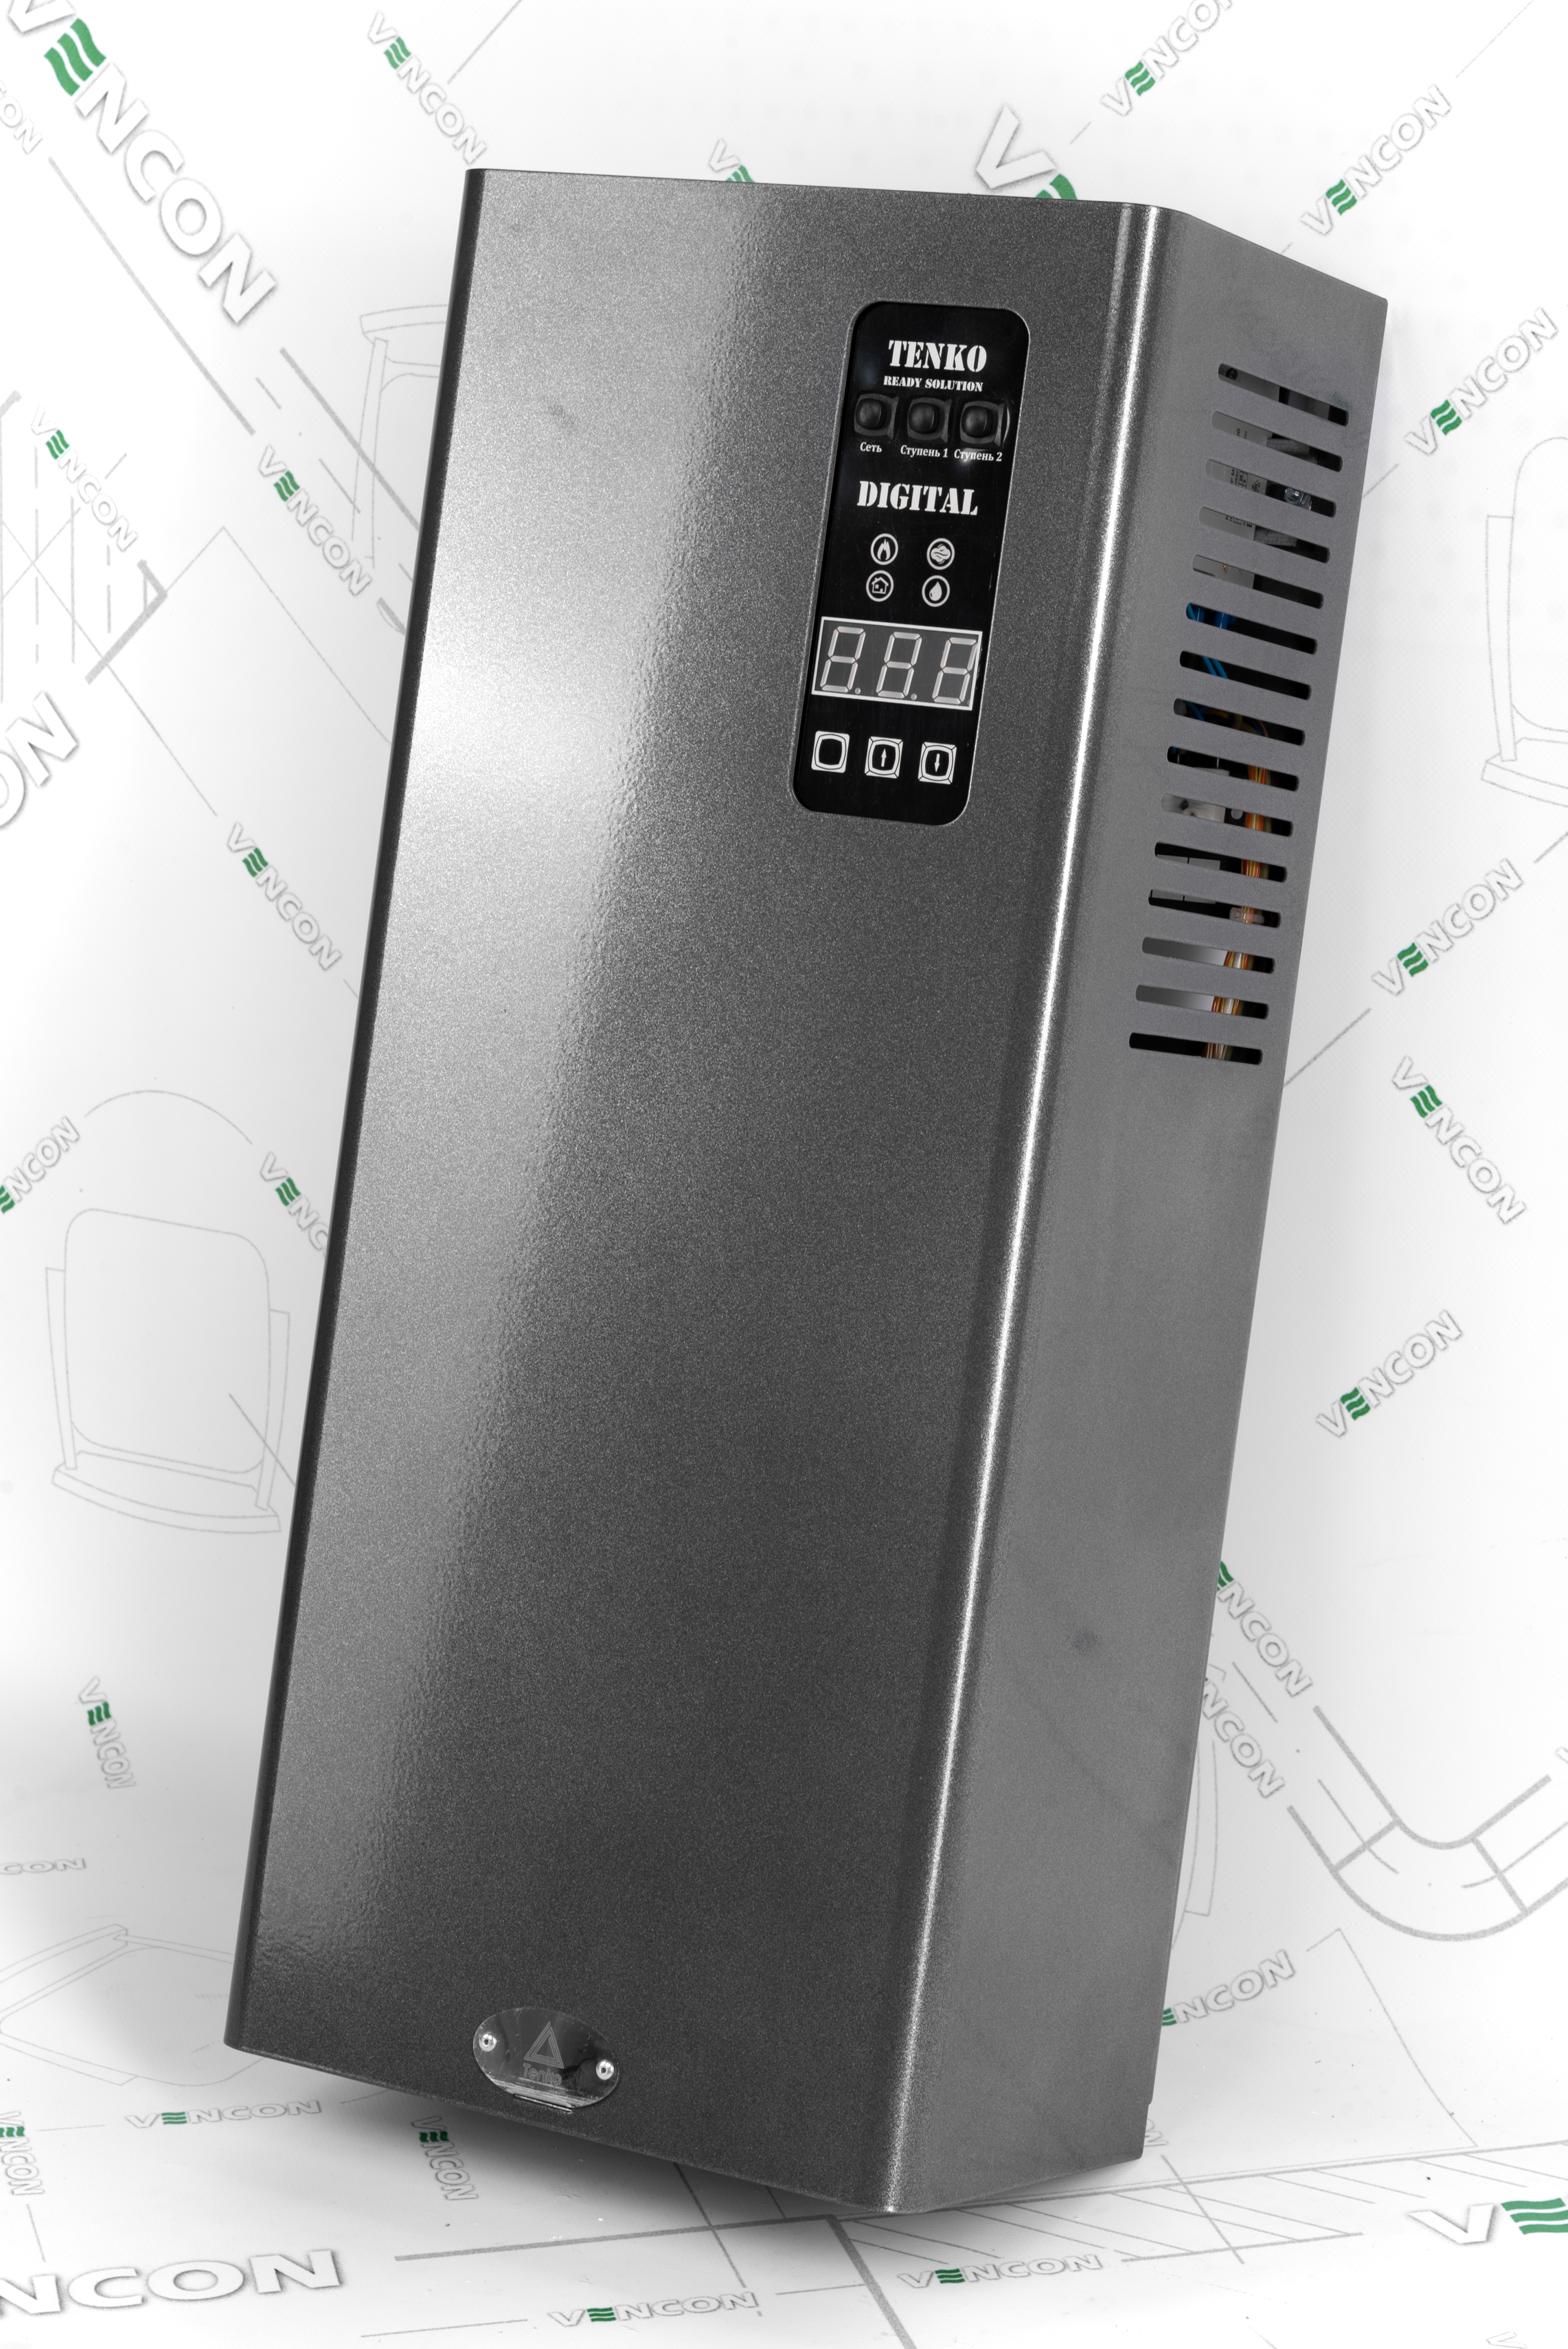 Электрический котел Tenko Digital Standart 3 220 цена 12848.00 грн - фотография 2